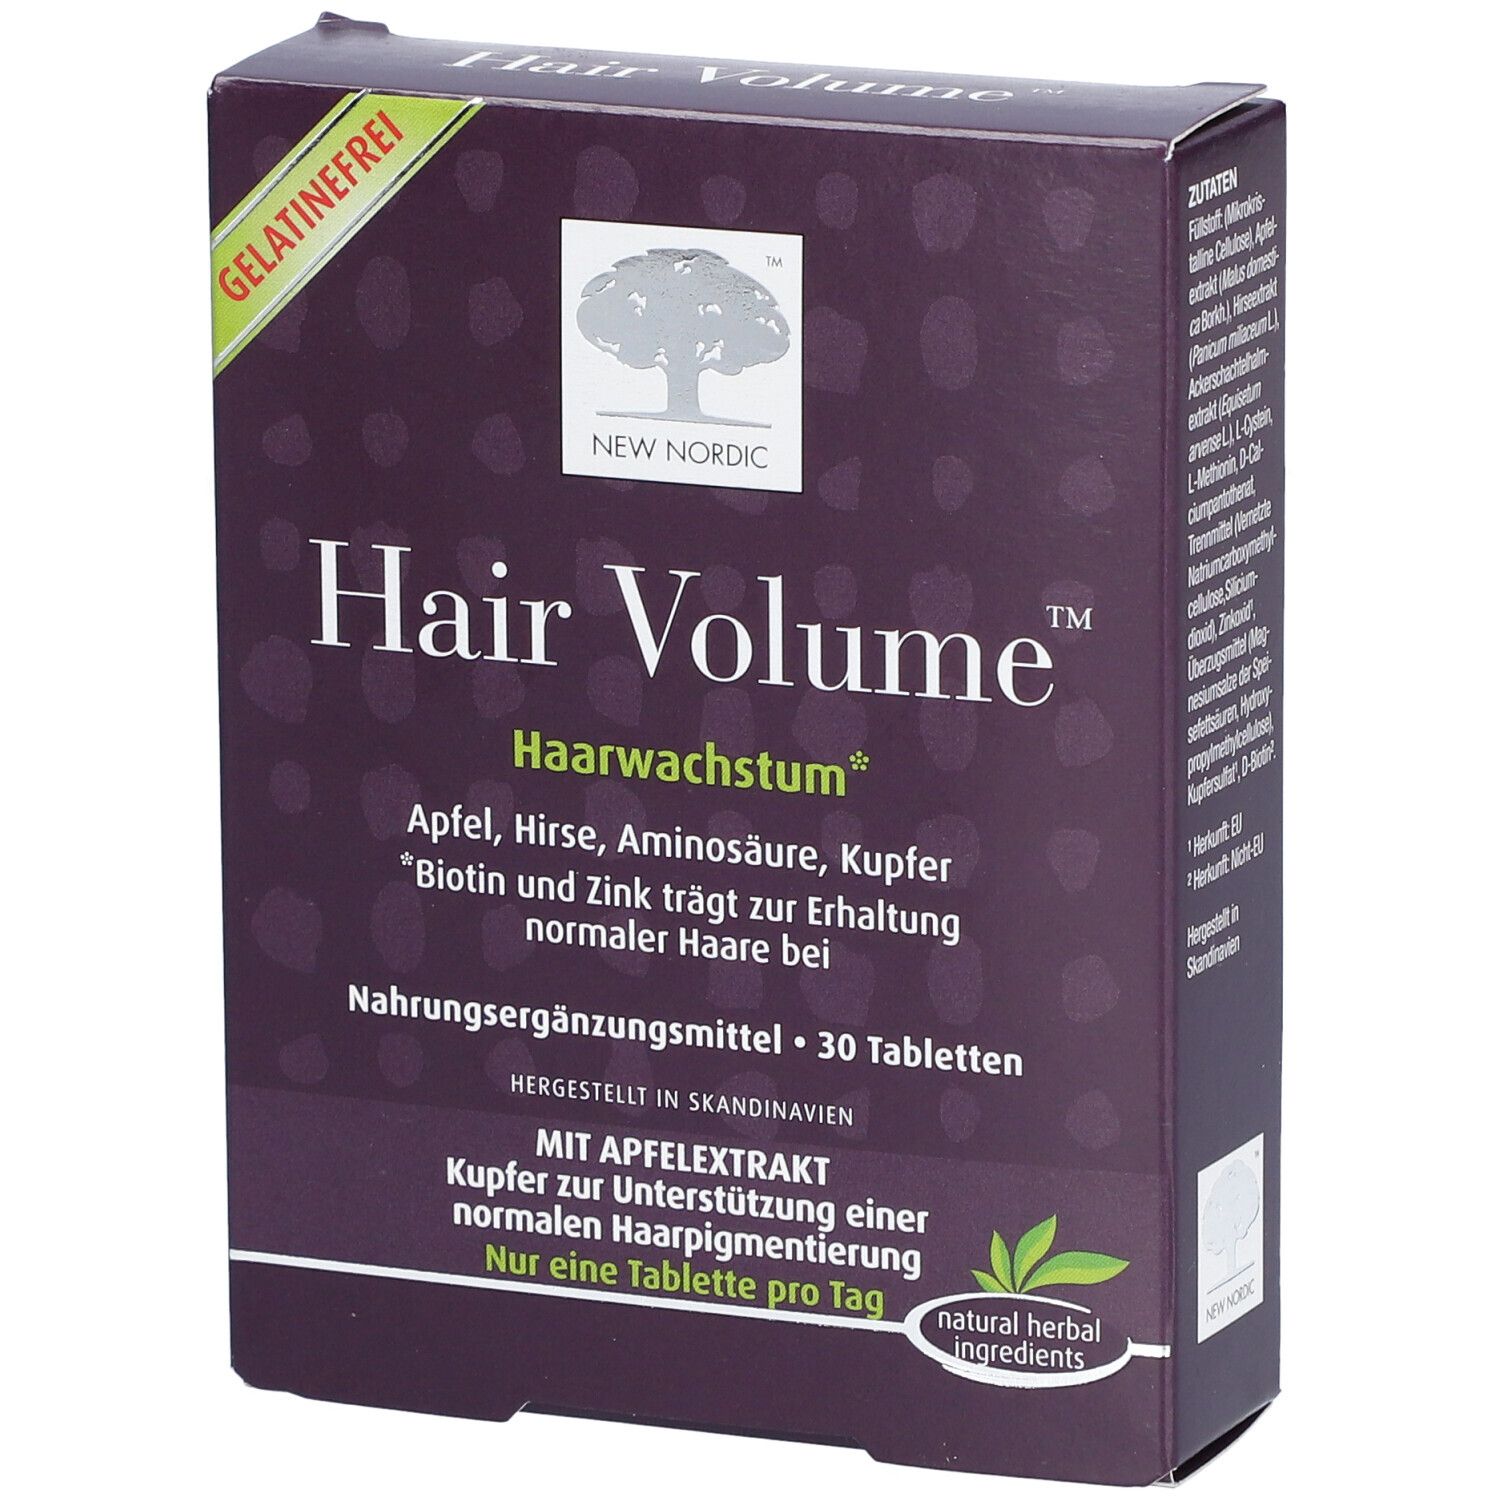 NEW Nordic Hair Volume™